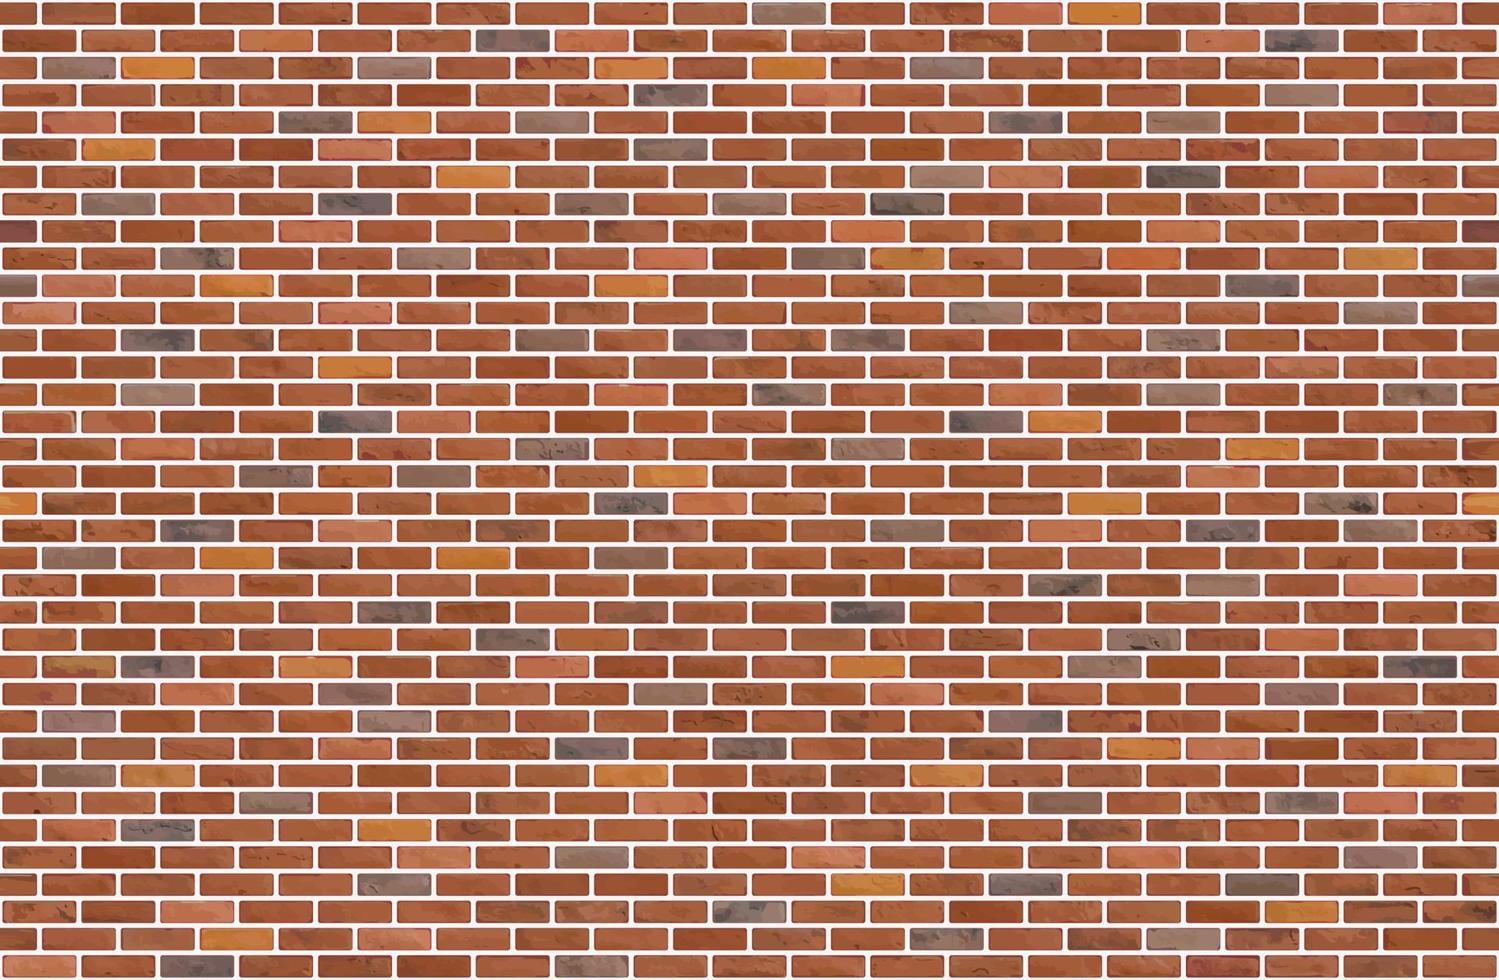 Beautiful brown block brick wall seamless pattern texture background vector